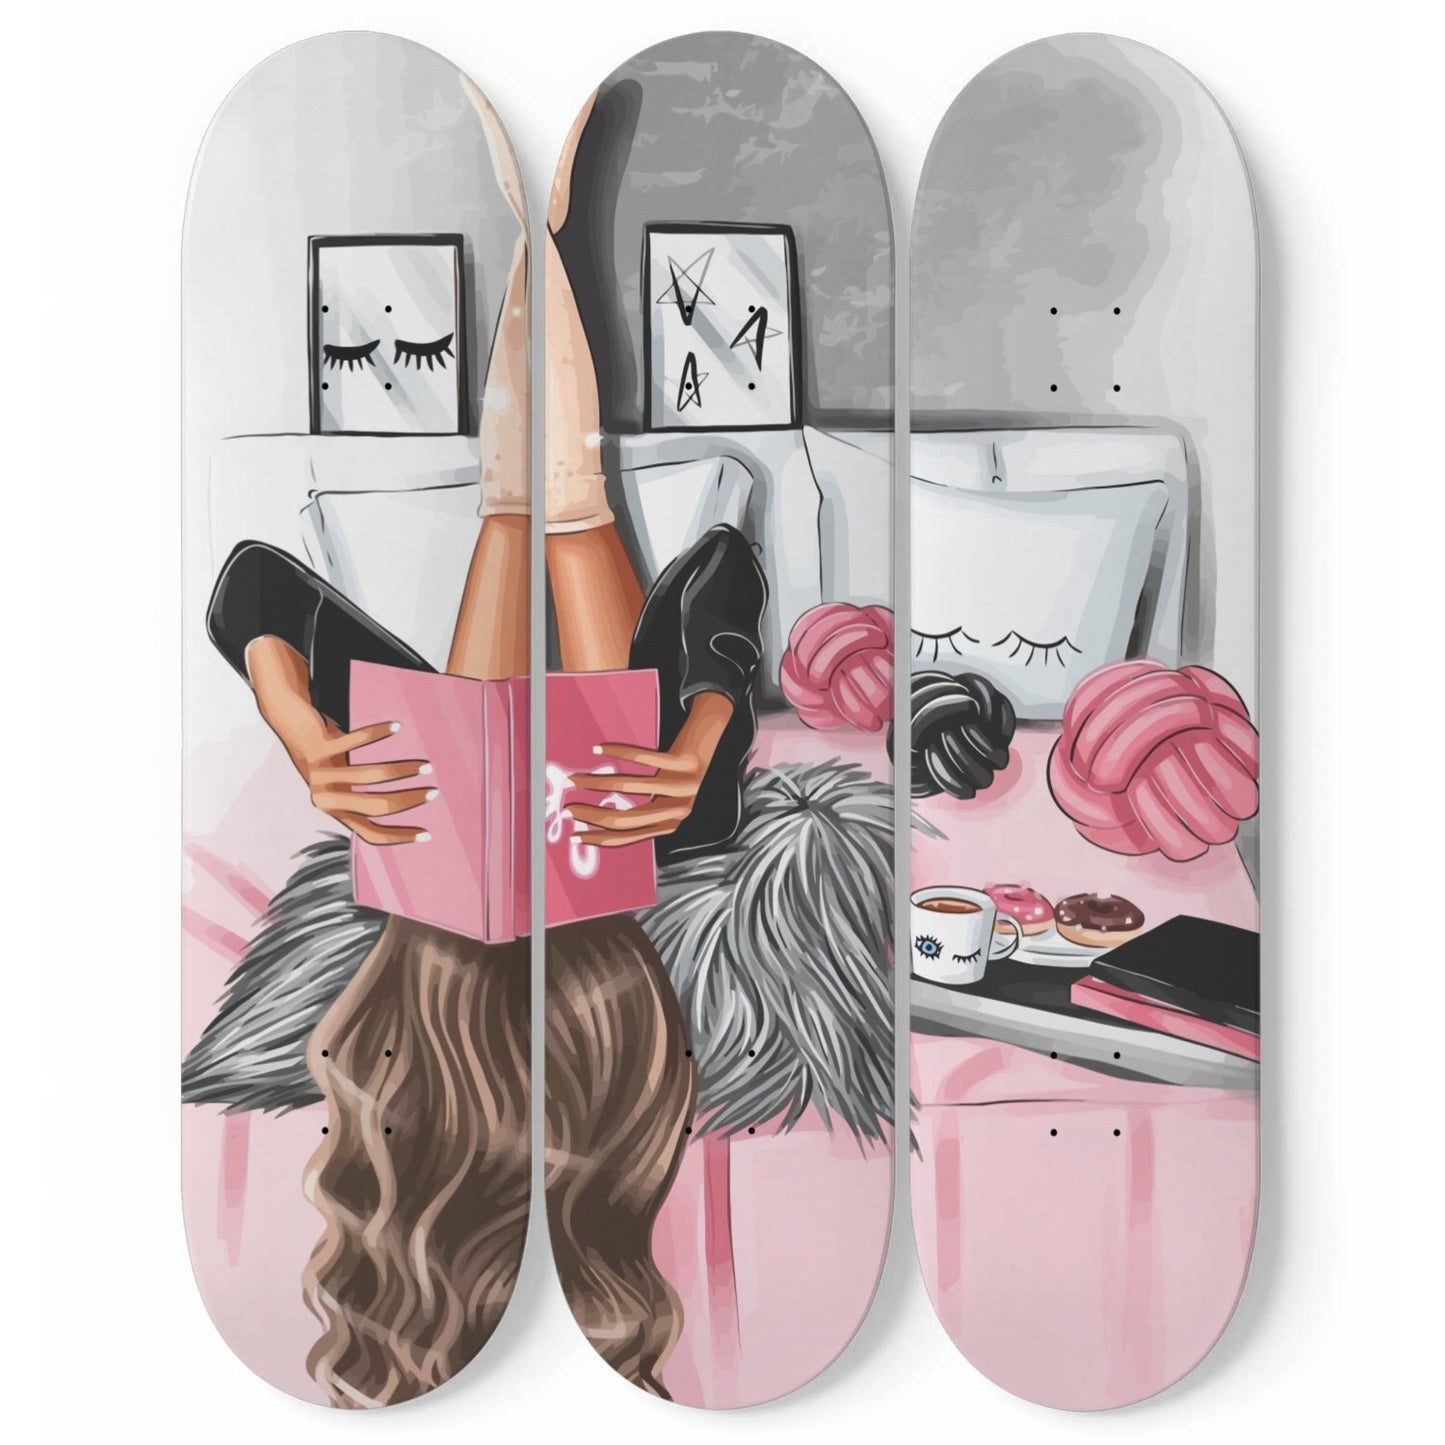 Fashion 5 | 3 Set of Skateboard Deck Wall Art | Wall Hanging Room Decor | Maple Wood | Birthday Gift